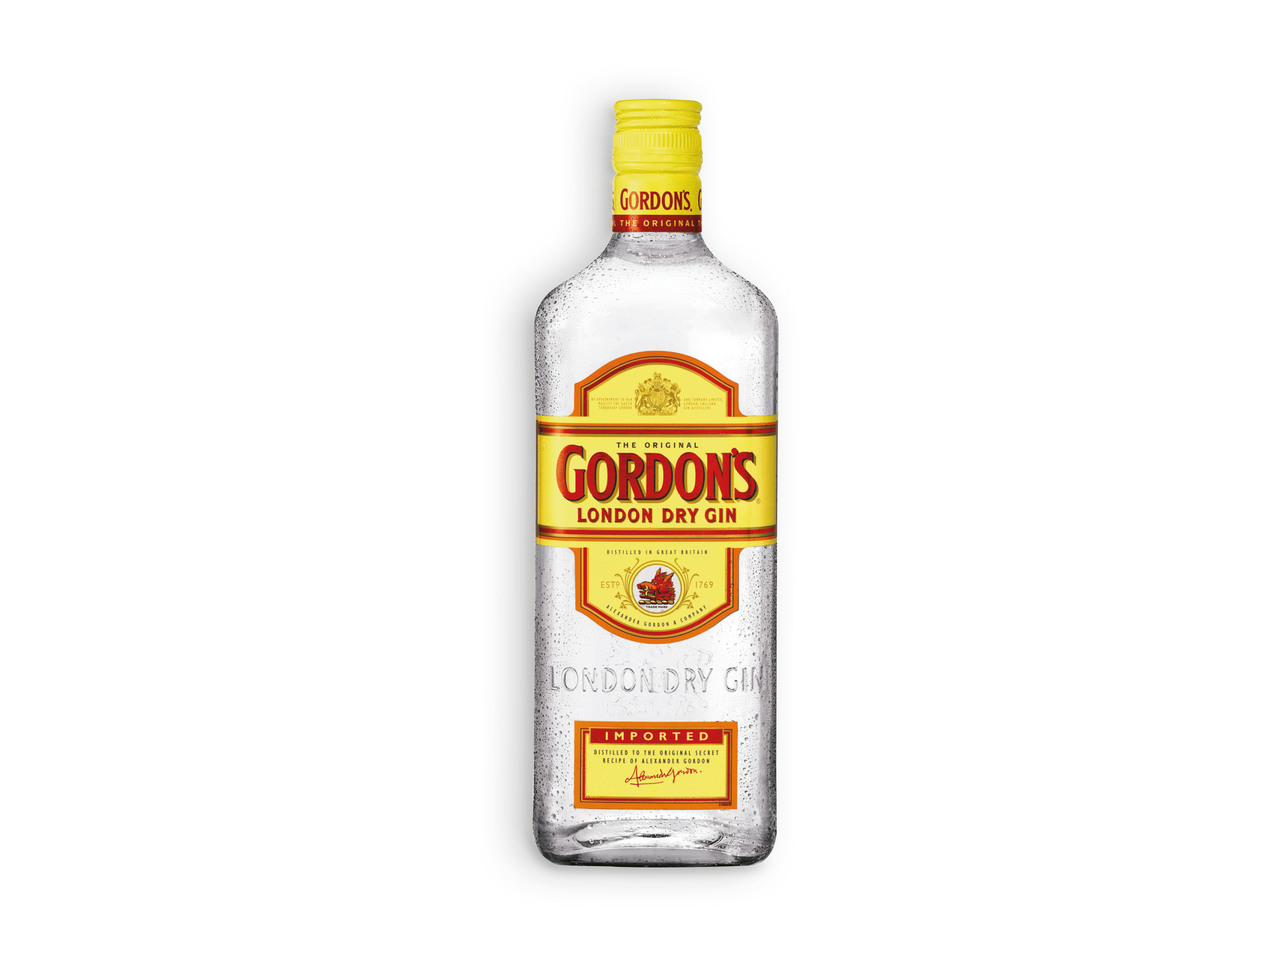 GORDON'S(R) London Dry Gin